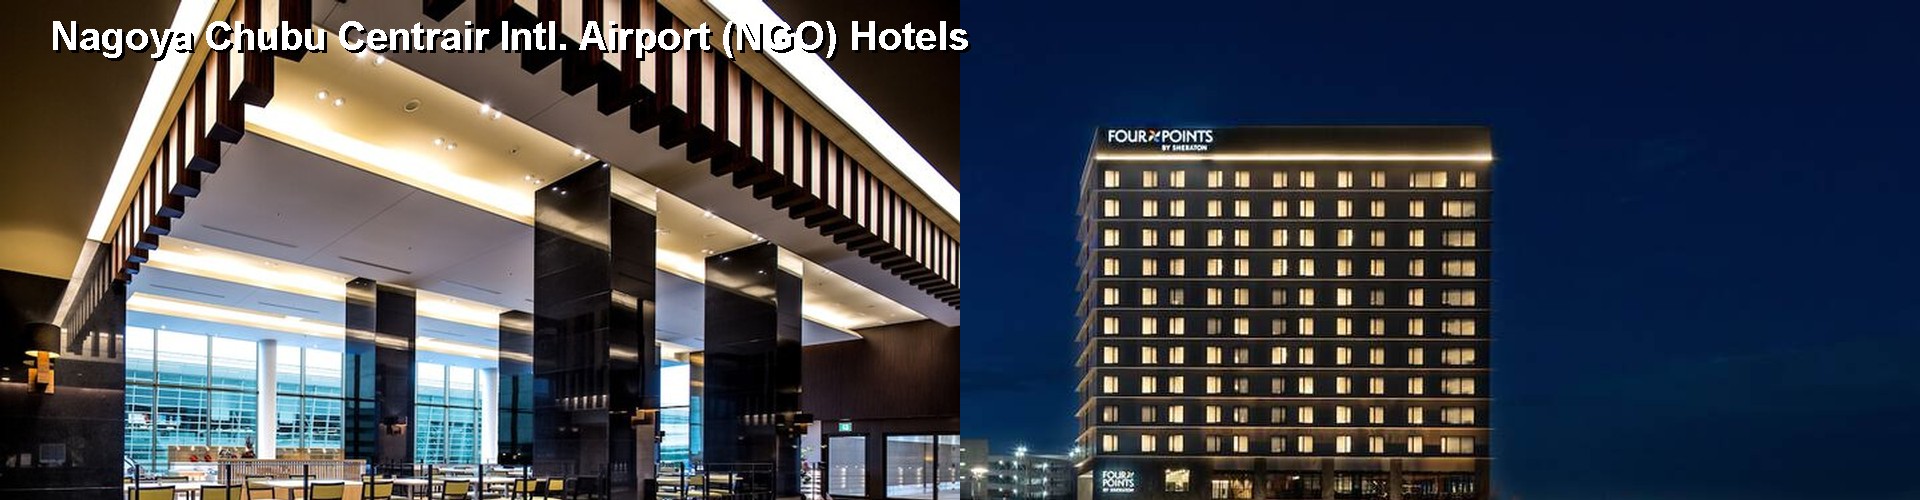 5 Best Hotels near Nagoya Chubu Centrair Intl. Airport (NGO)